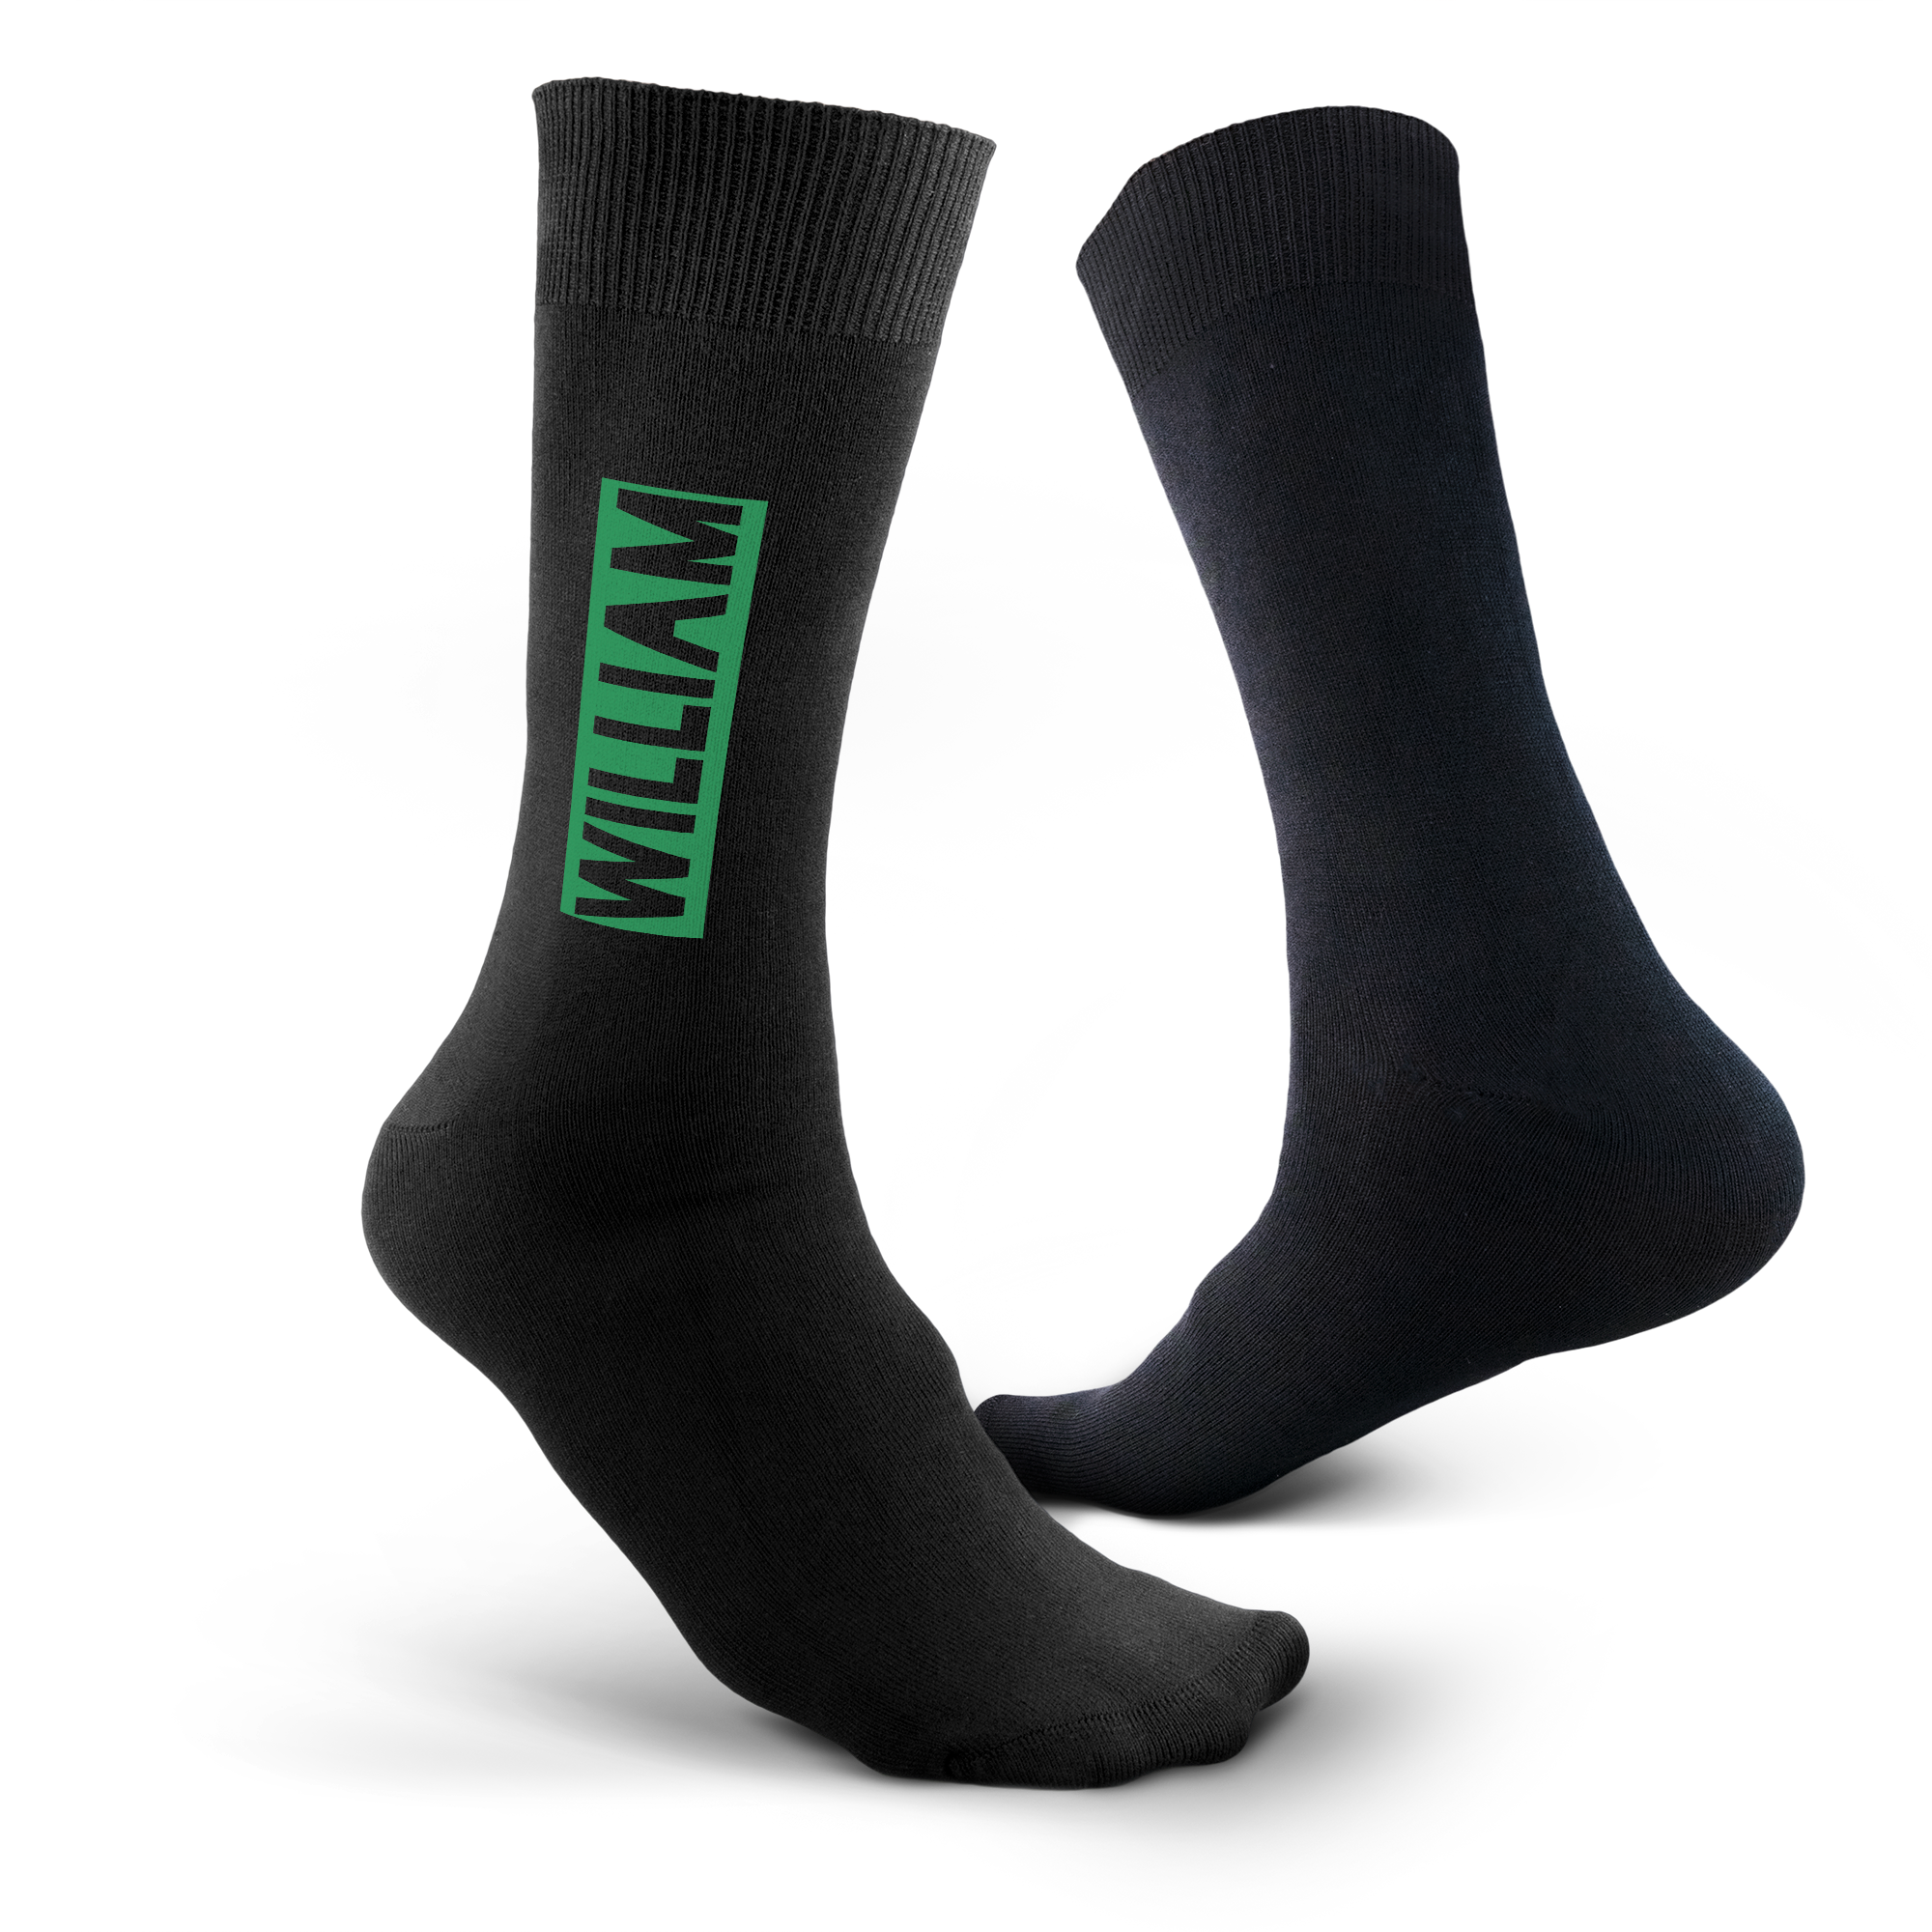 Personalised socks - Size 43-46